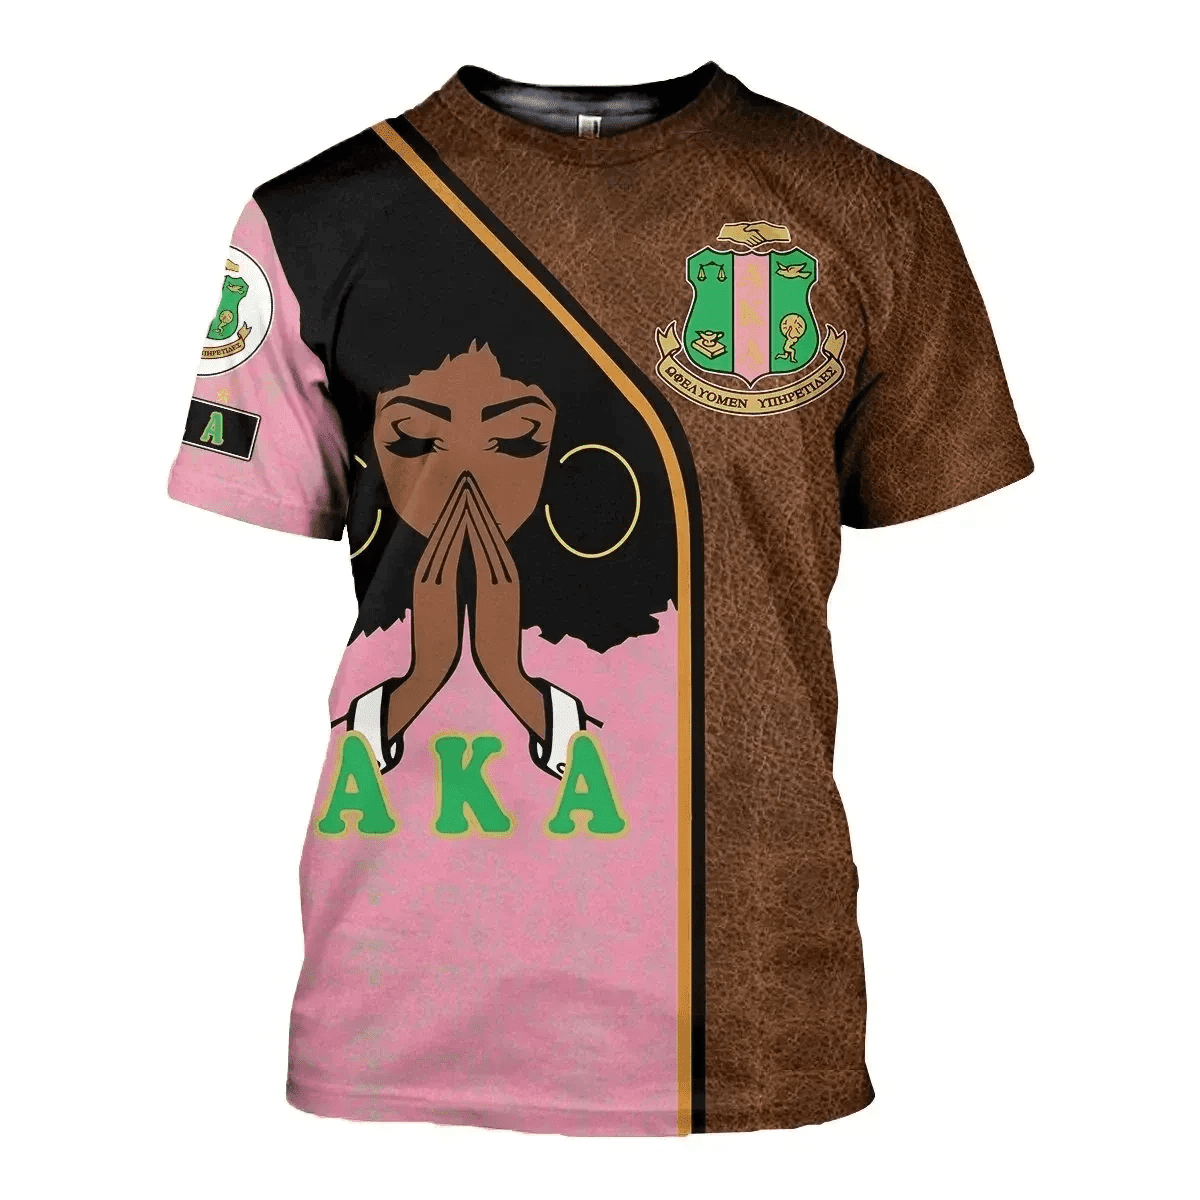 African T-shirt – Pray Girl AKA Sorority Tee